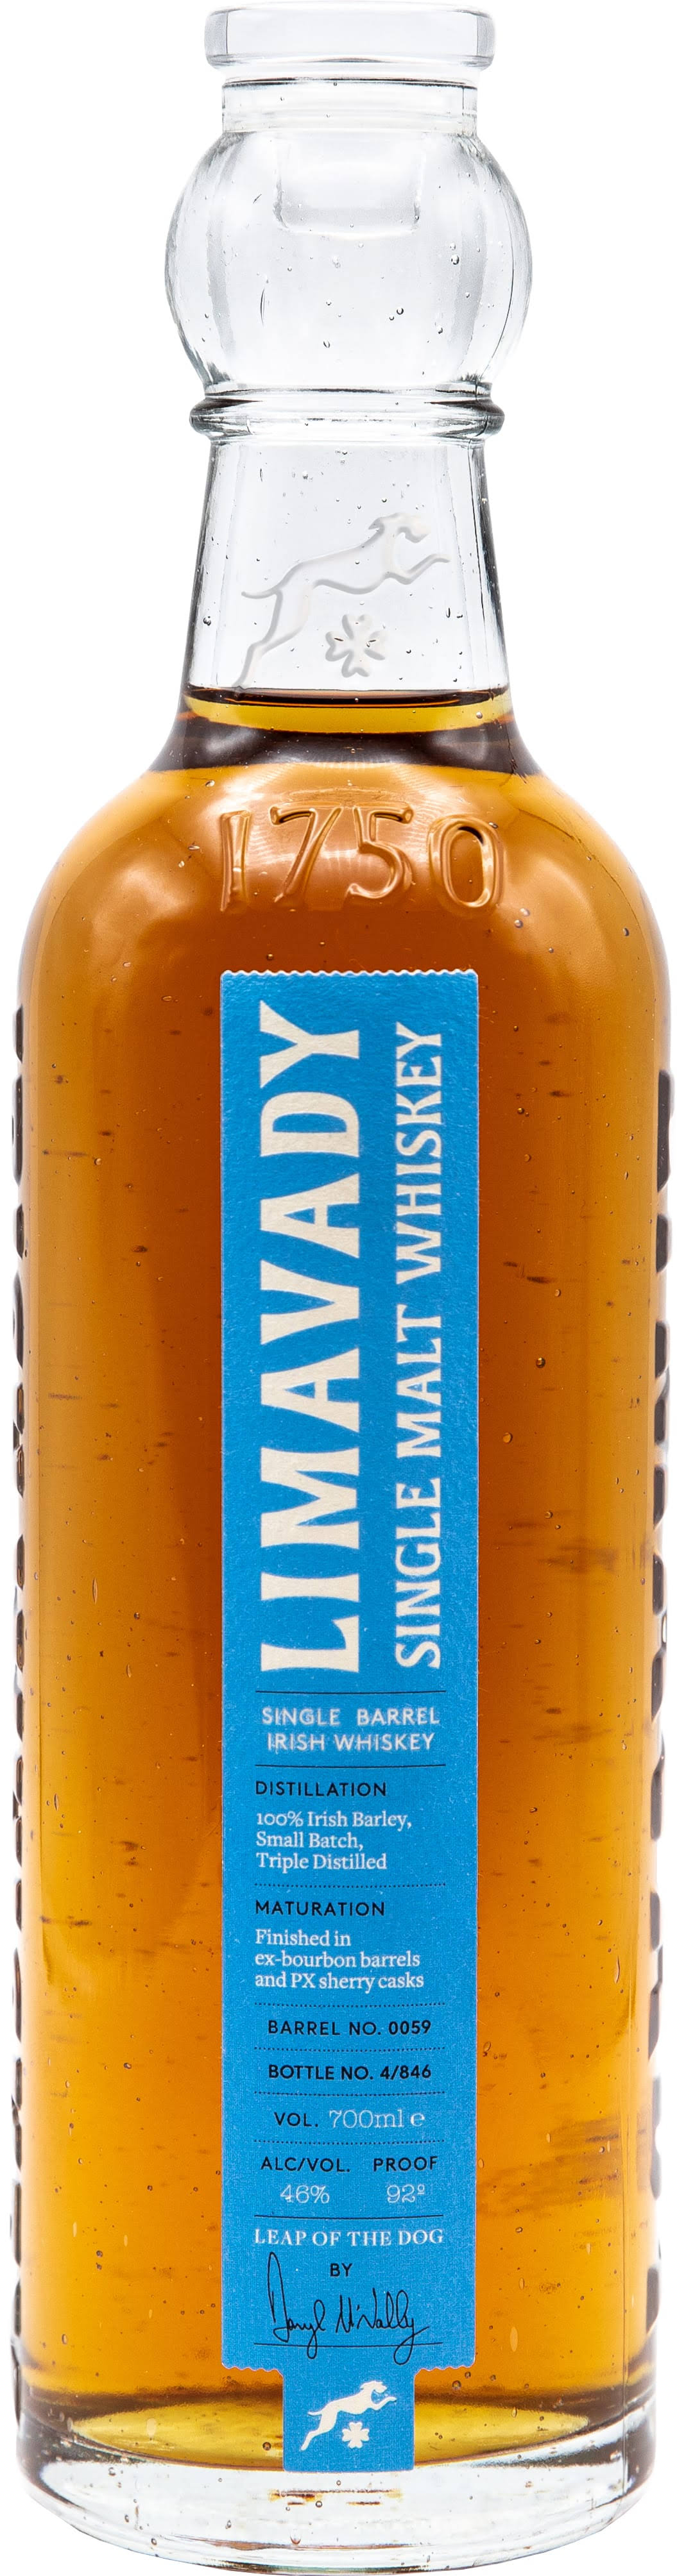 Limavady Single Barrel Single Malt Irish Whiskey Cask 113 700ml Bottle